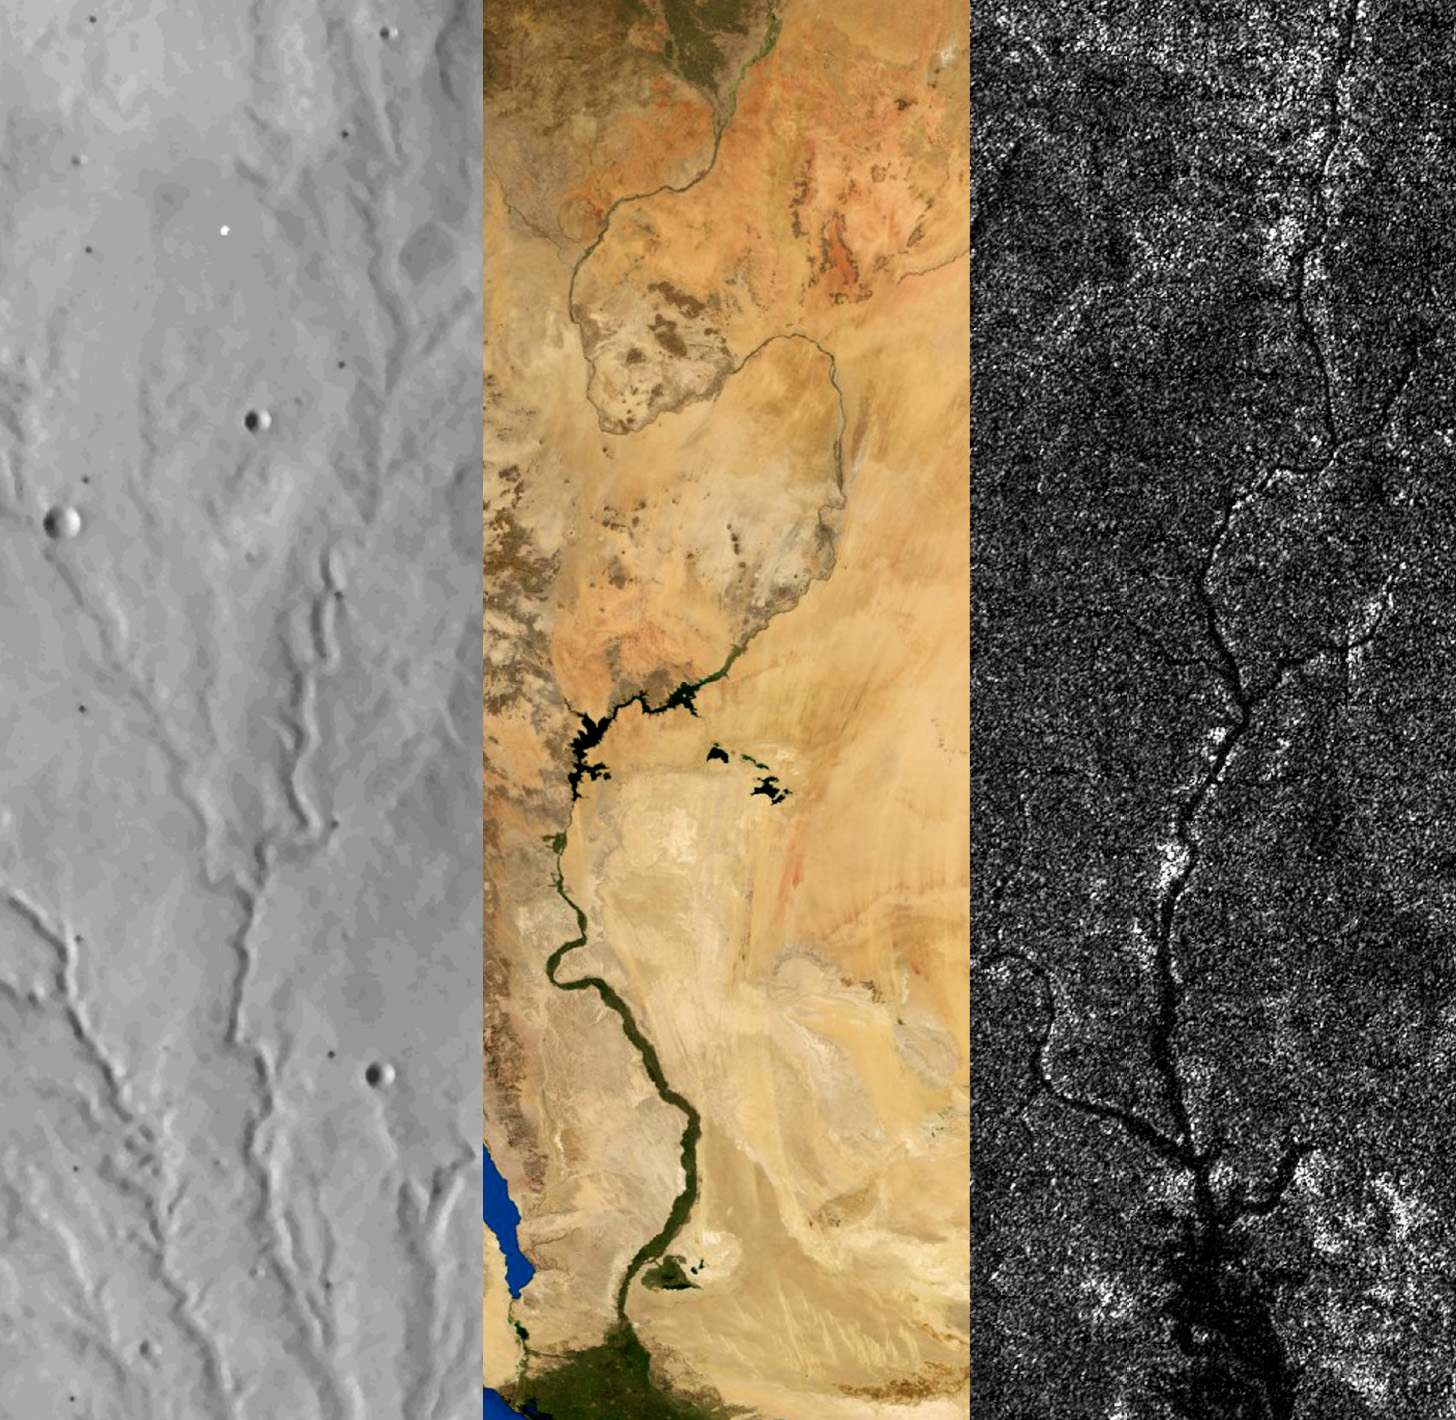 rivers on Mars, Earth and Titan